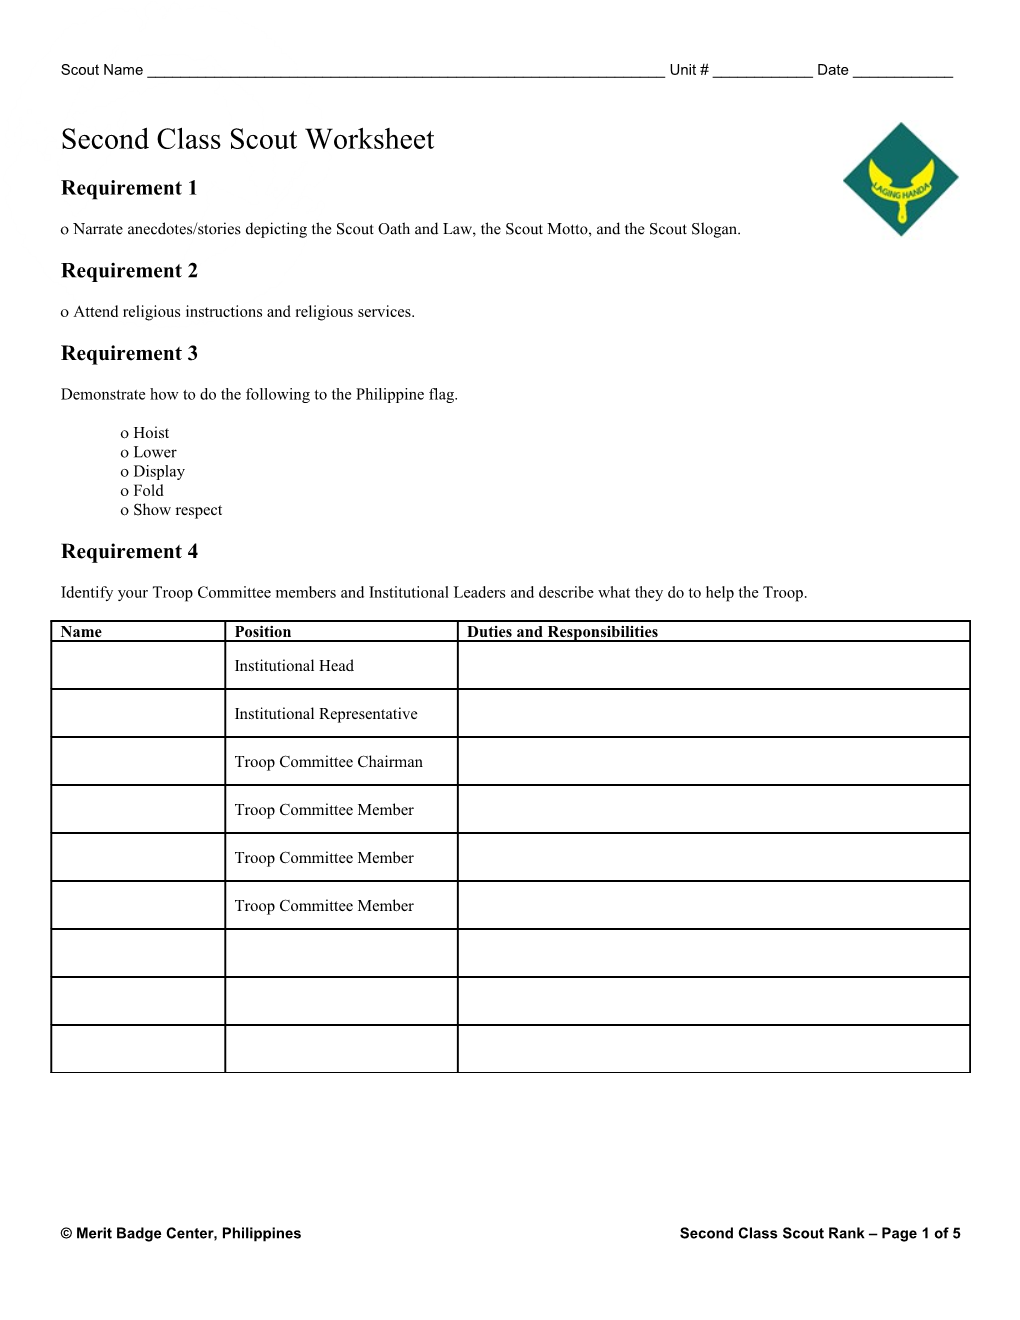 Second Class Scout Rank Worksheet